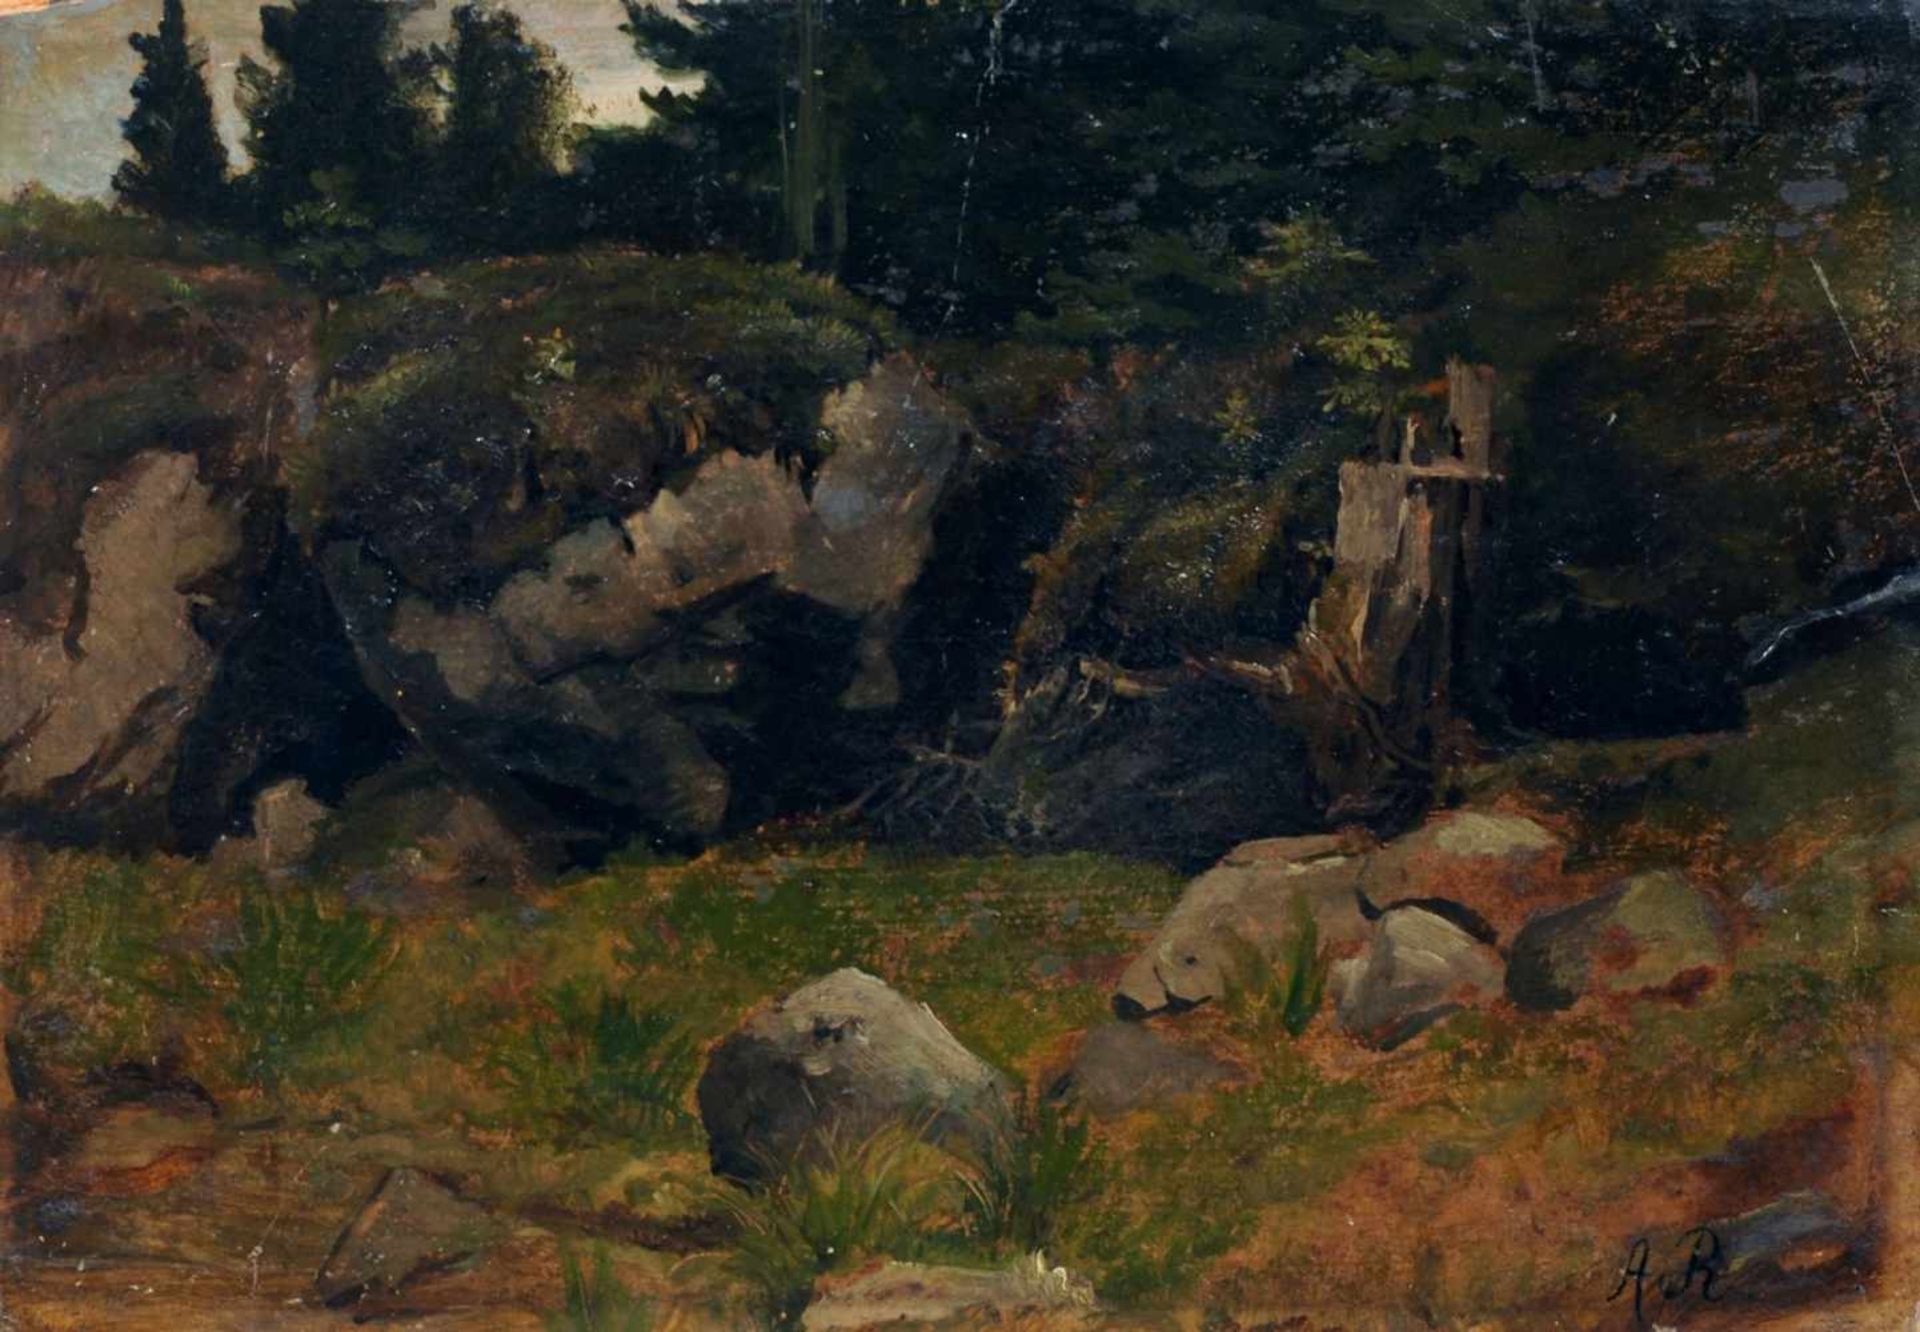 Dresdner (?) Künstler, Felsbrocken am Waldsaum. Wohl um 1860.Öl auf Malpappe, vollflächig auf